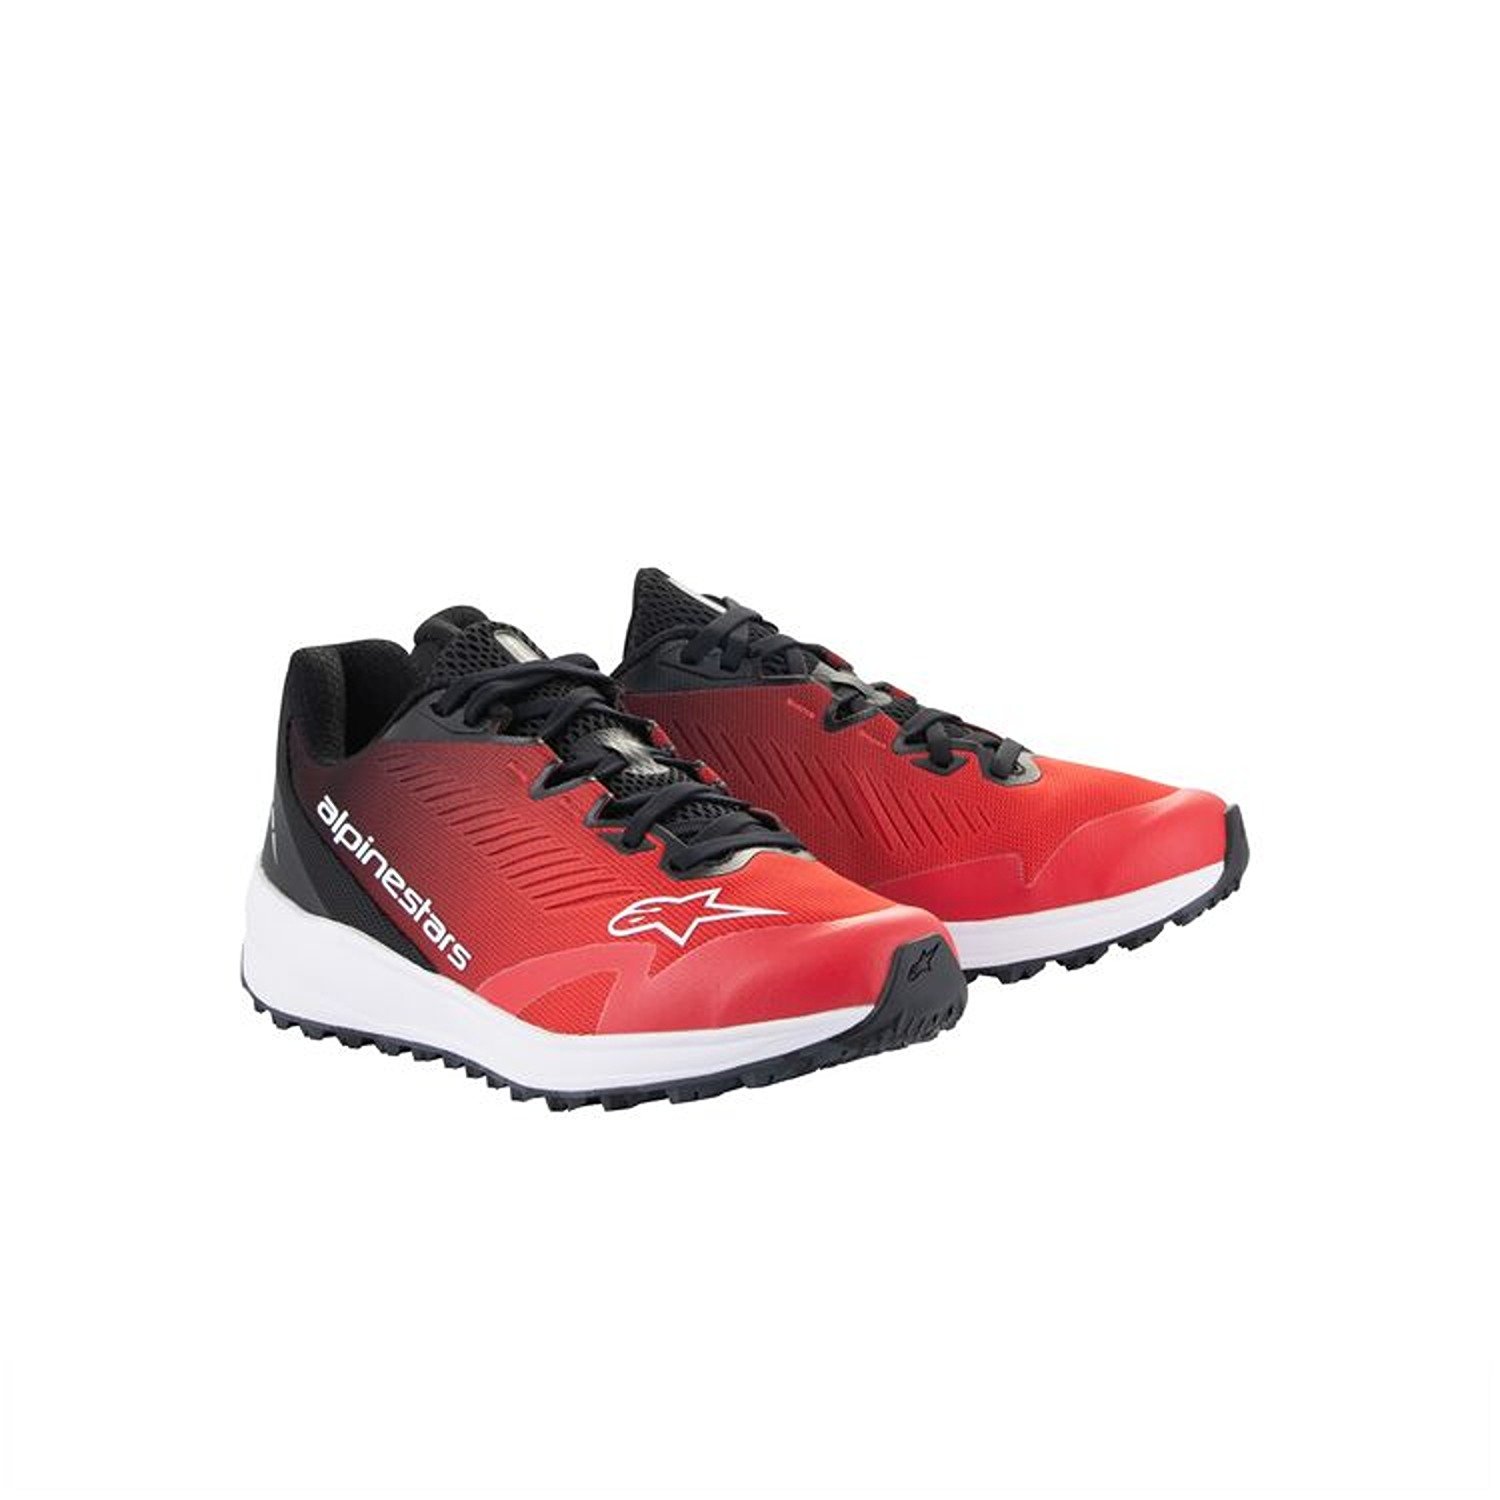 Image of Alpinestars Meta Road V2 Shoes Red Black White Size US 45 ID 8059347383071